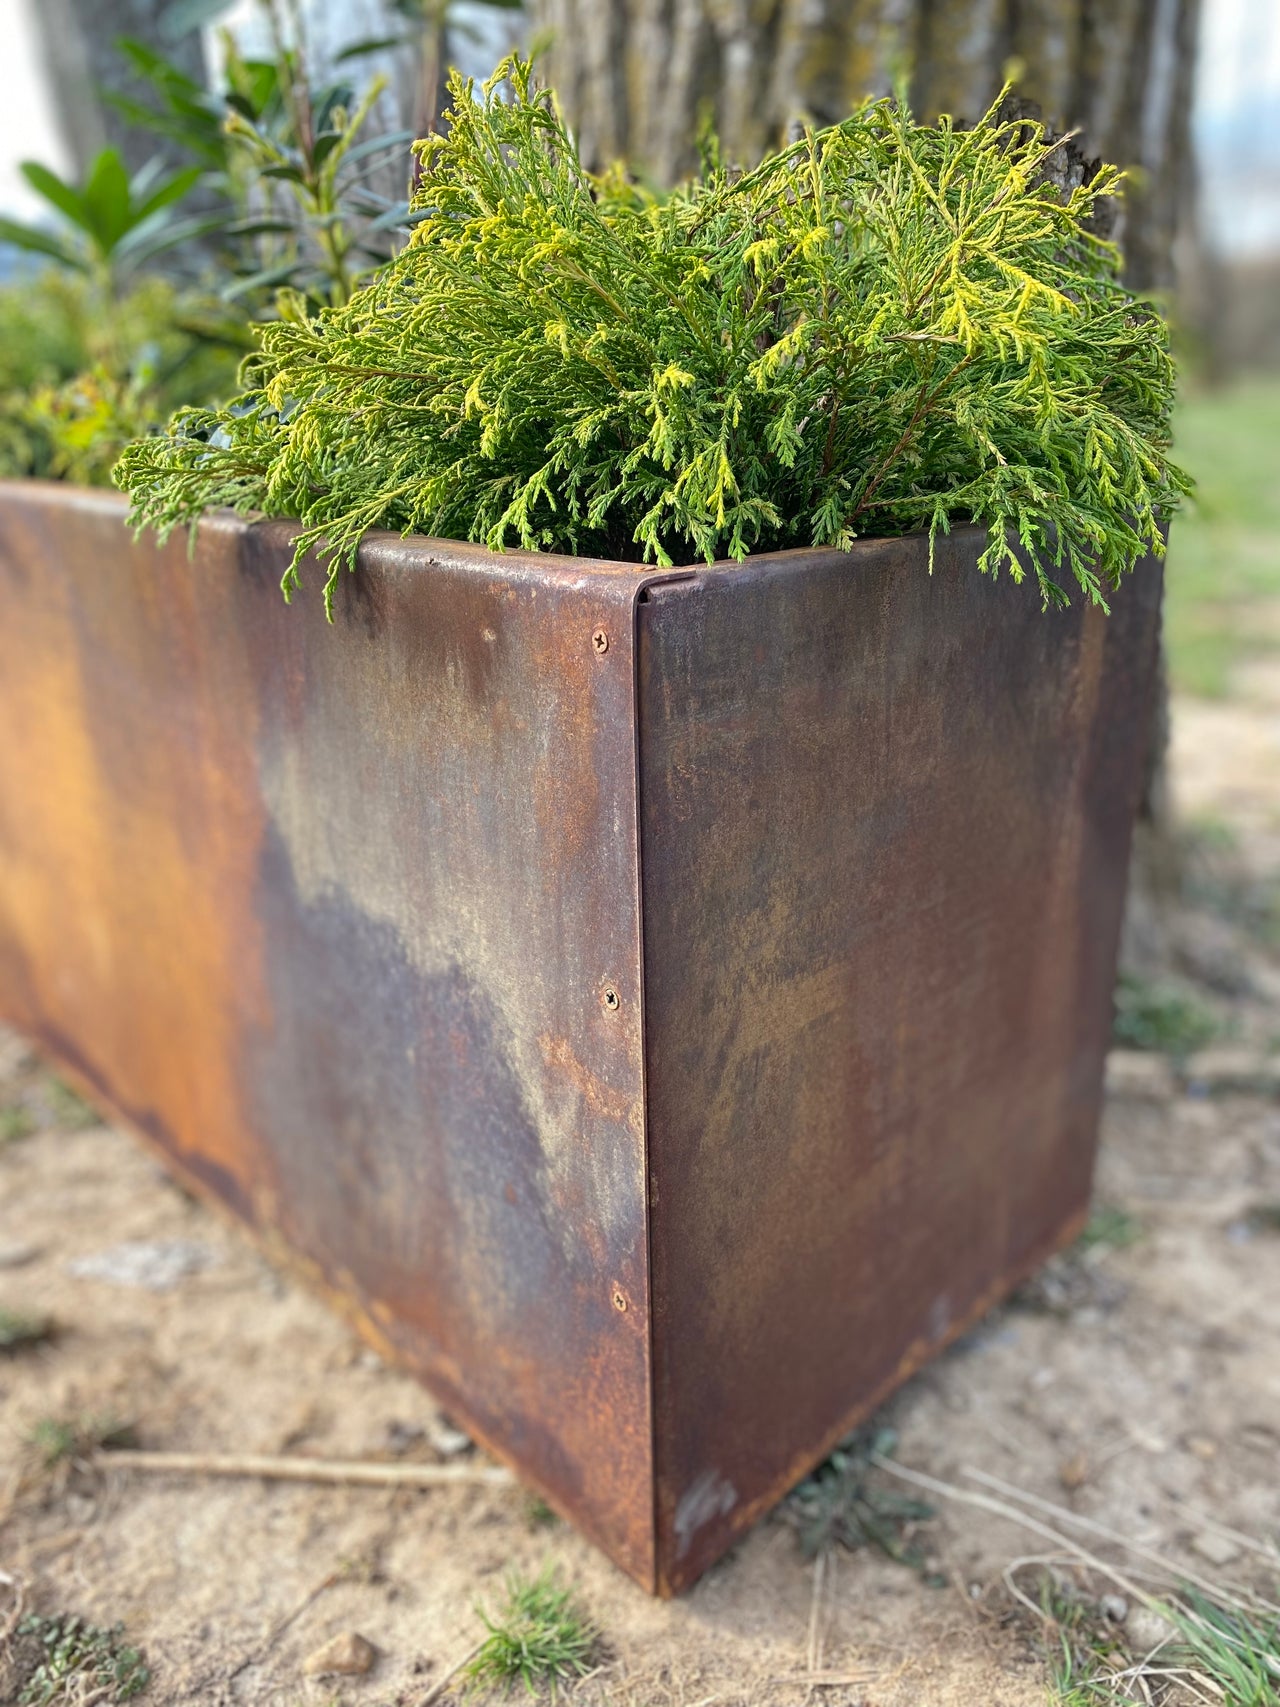 Metal Trough Planter - Medium Rectangular Planter - 14" Deep Spring Annual Planter Pot - Raw Steel Will Develop Natural Rusty Patina